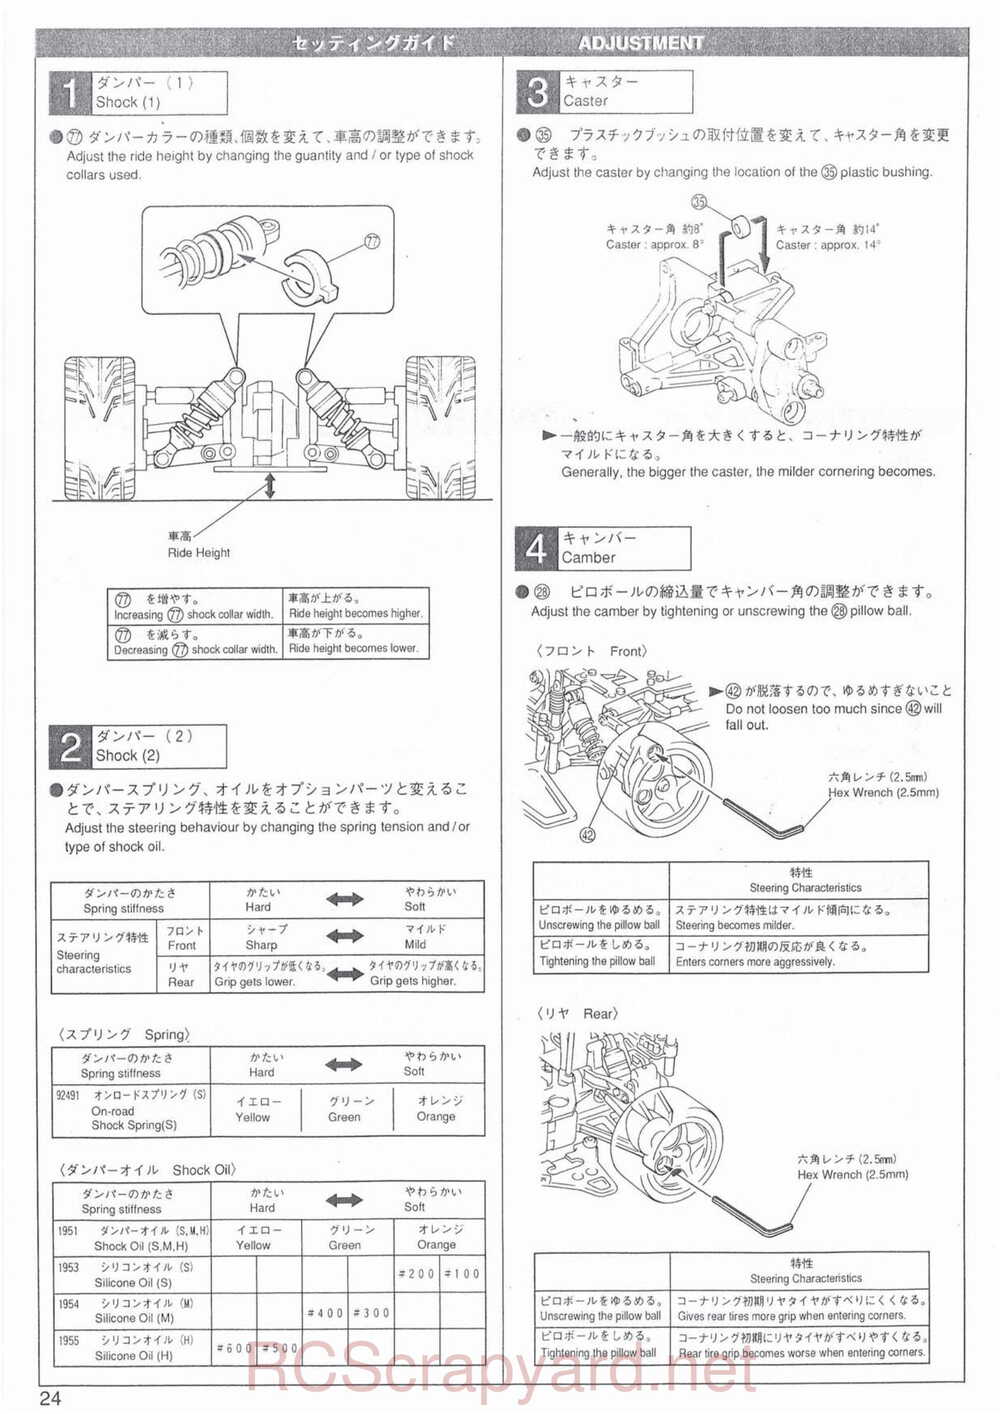 Kyosho - 31701 - Superten-Four FW-03 - Manual - Page 24